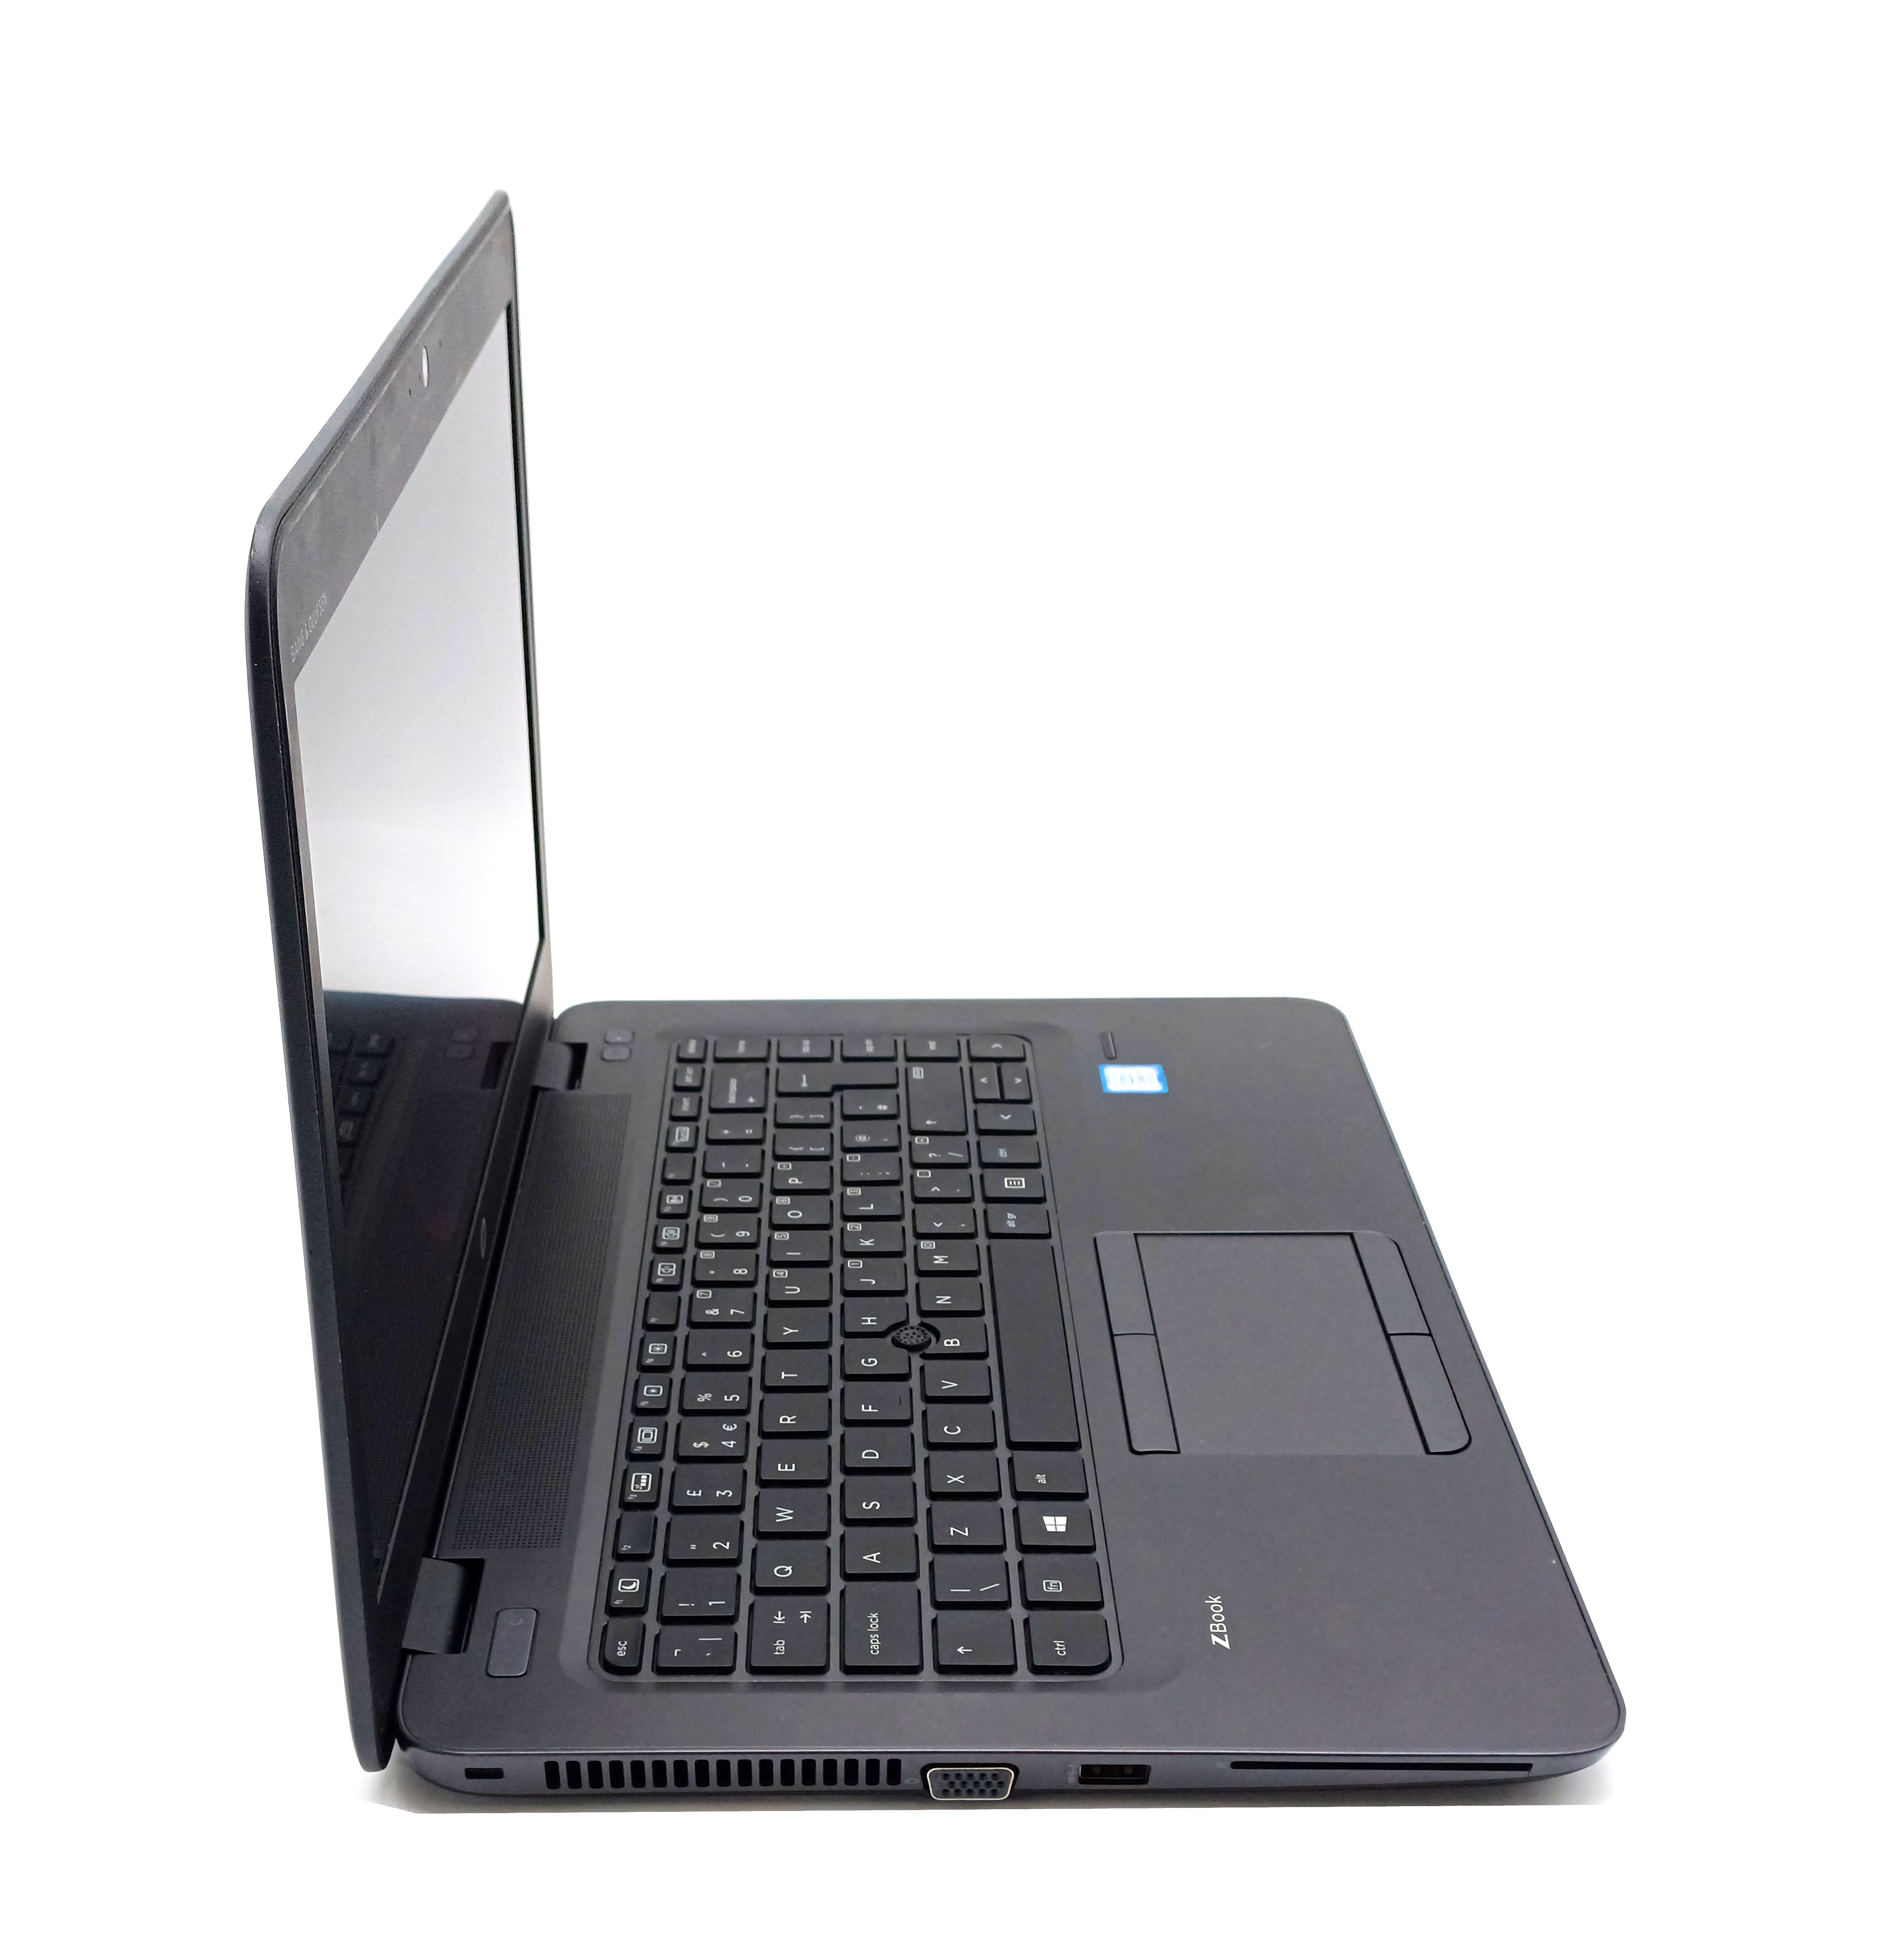 HP ZBook 14U G4 Laptop, 14" Core i7 7th Gen, 8GB RAM, 256GB SSD